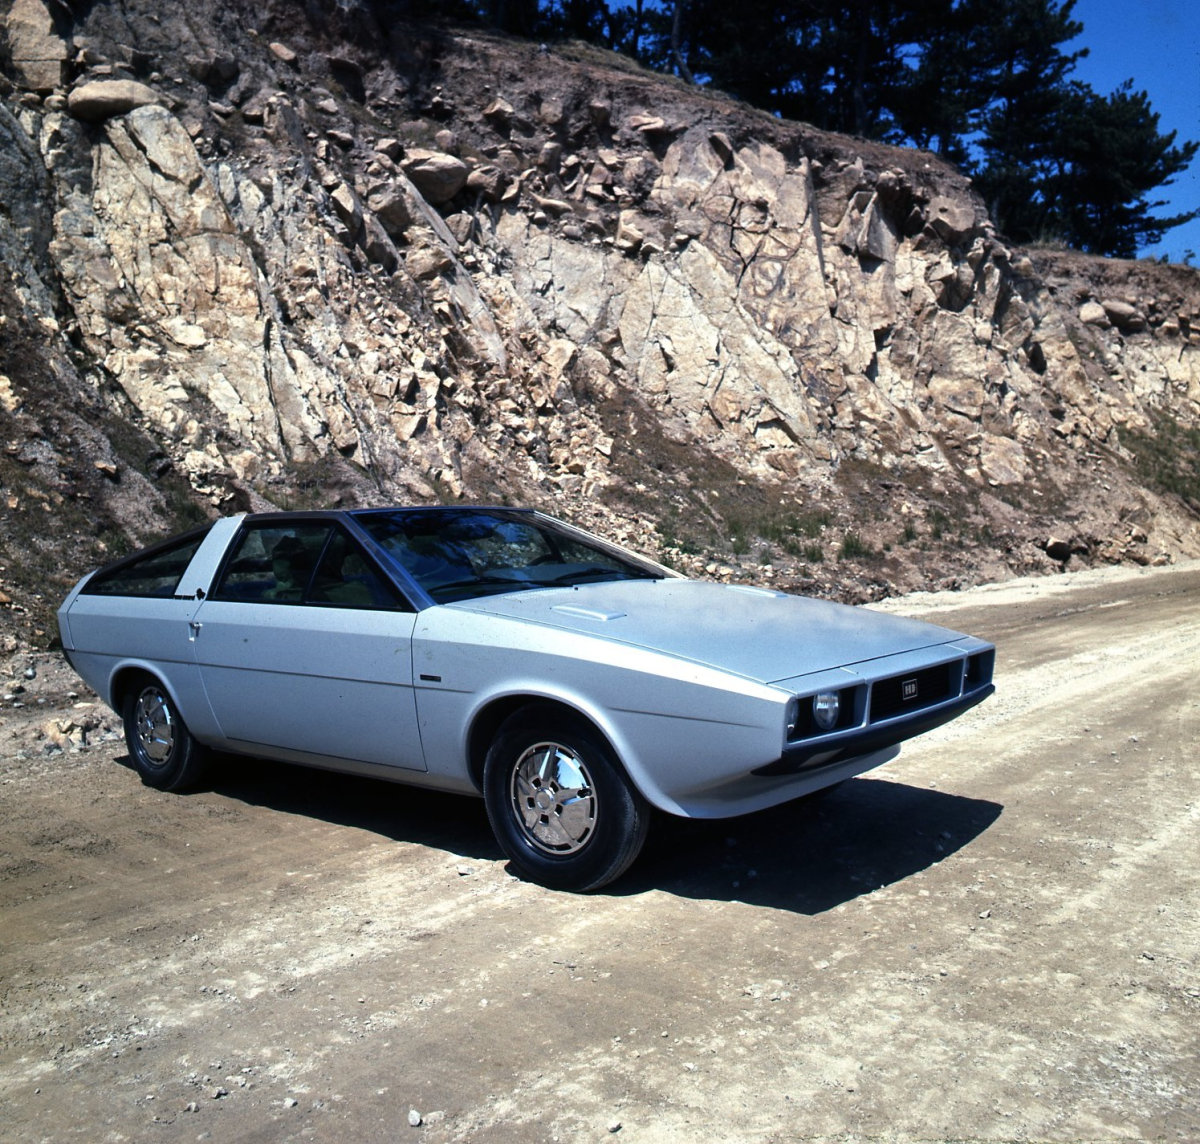 hyundai-giorgetto-giugiaro-1974-pony-coupe-concept-02_jpg